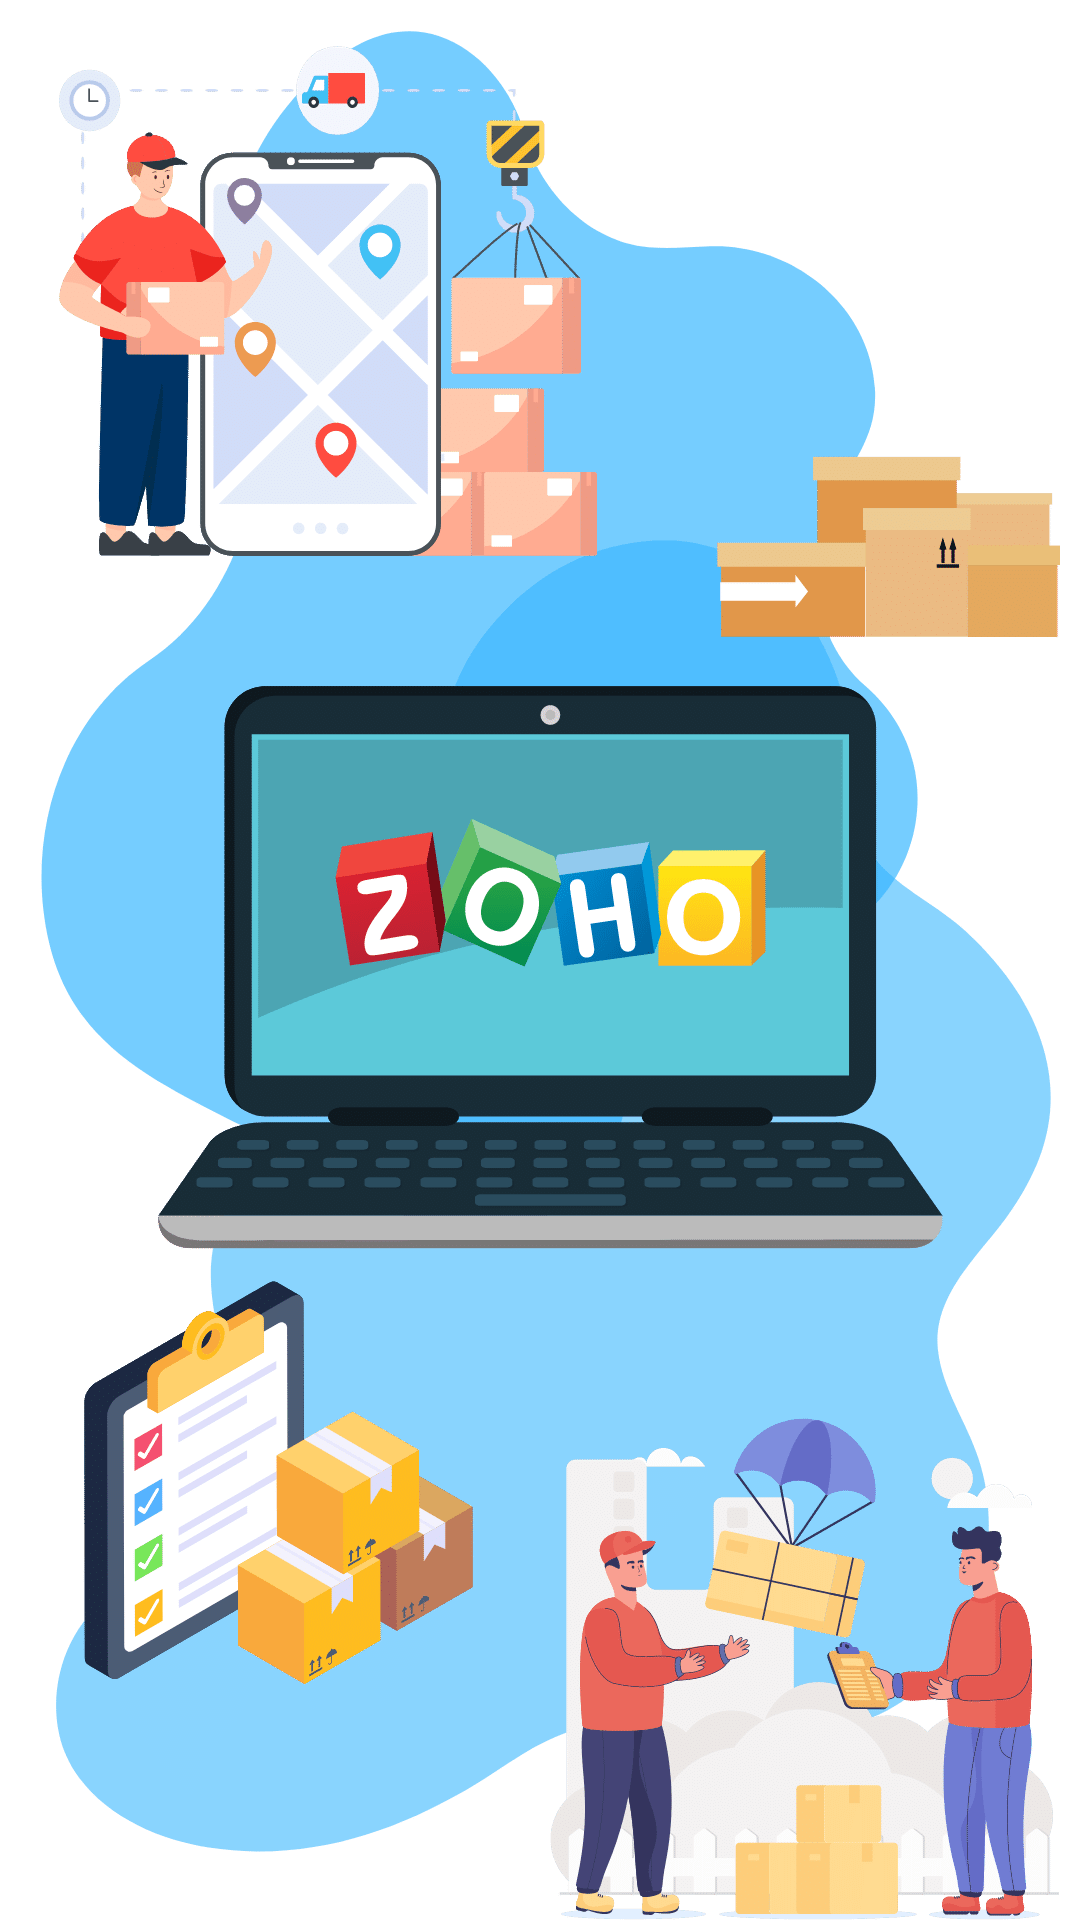 Zoho Inventory management software